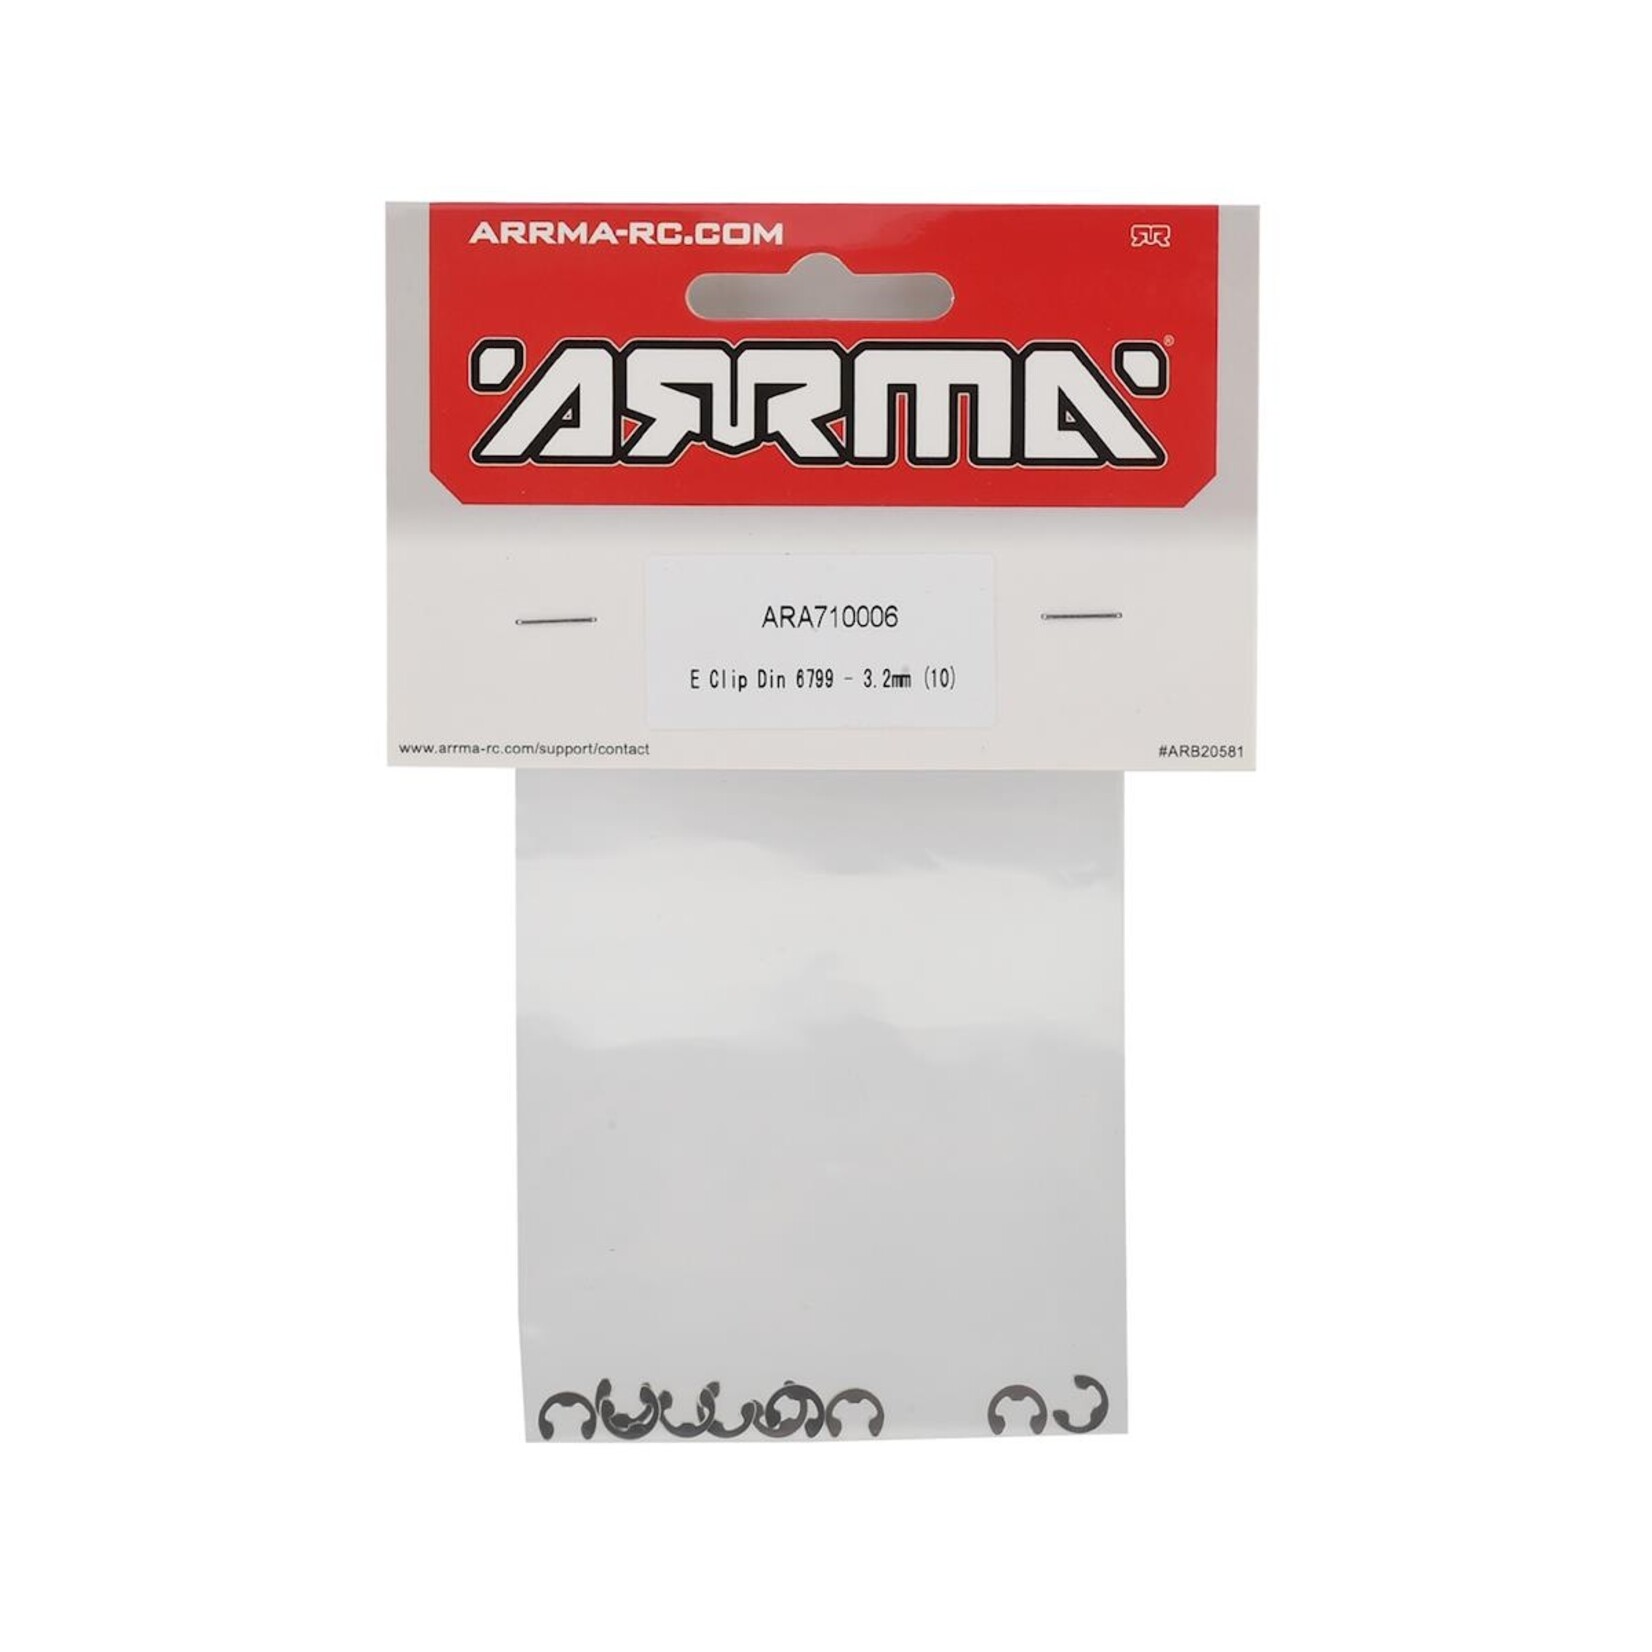 ARRMA Arrma 3.2mm E-Clip (10) #ARA710006